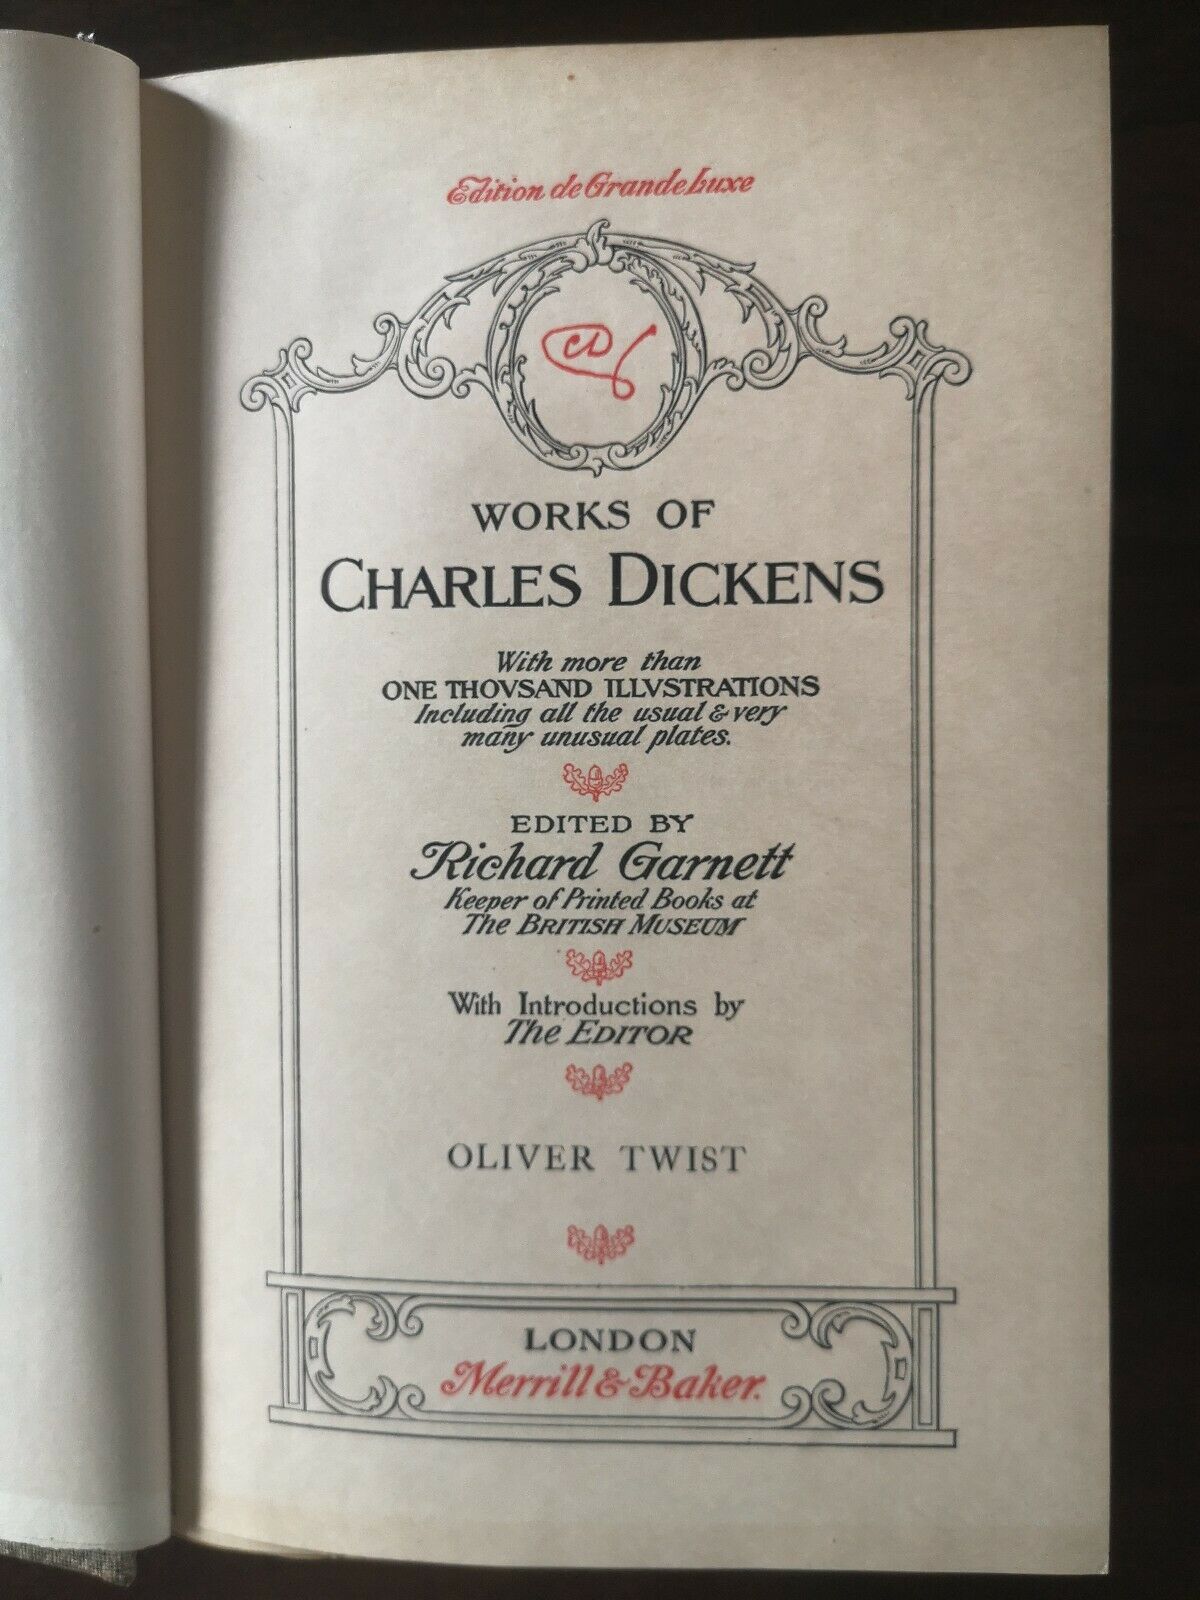 Work Of Charles Dickens Richard Garnett Oliver Twist Merrill & Baker London 1900 edition de grande lux 500 numbered end registered copies this copy n. 237